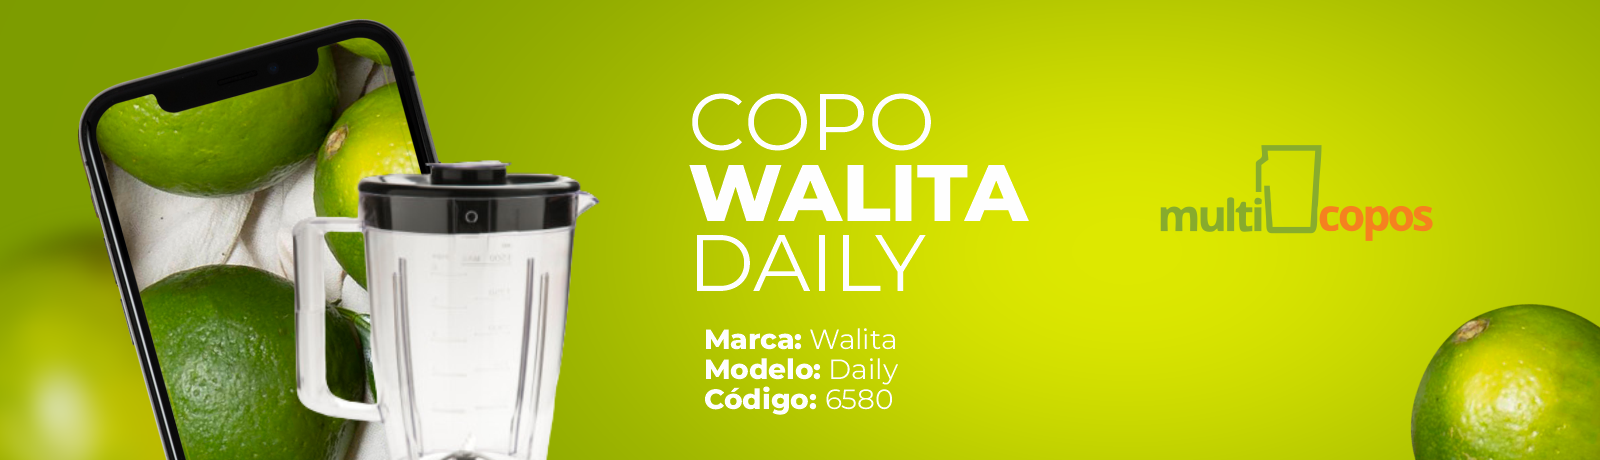 Copo Walita Daily 6580